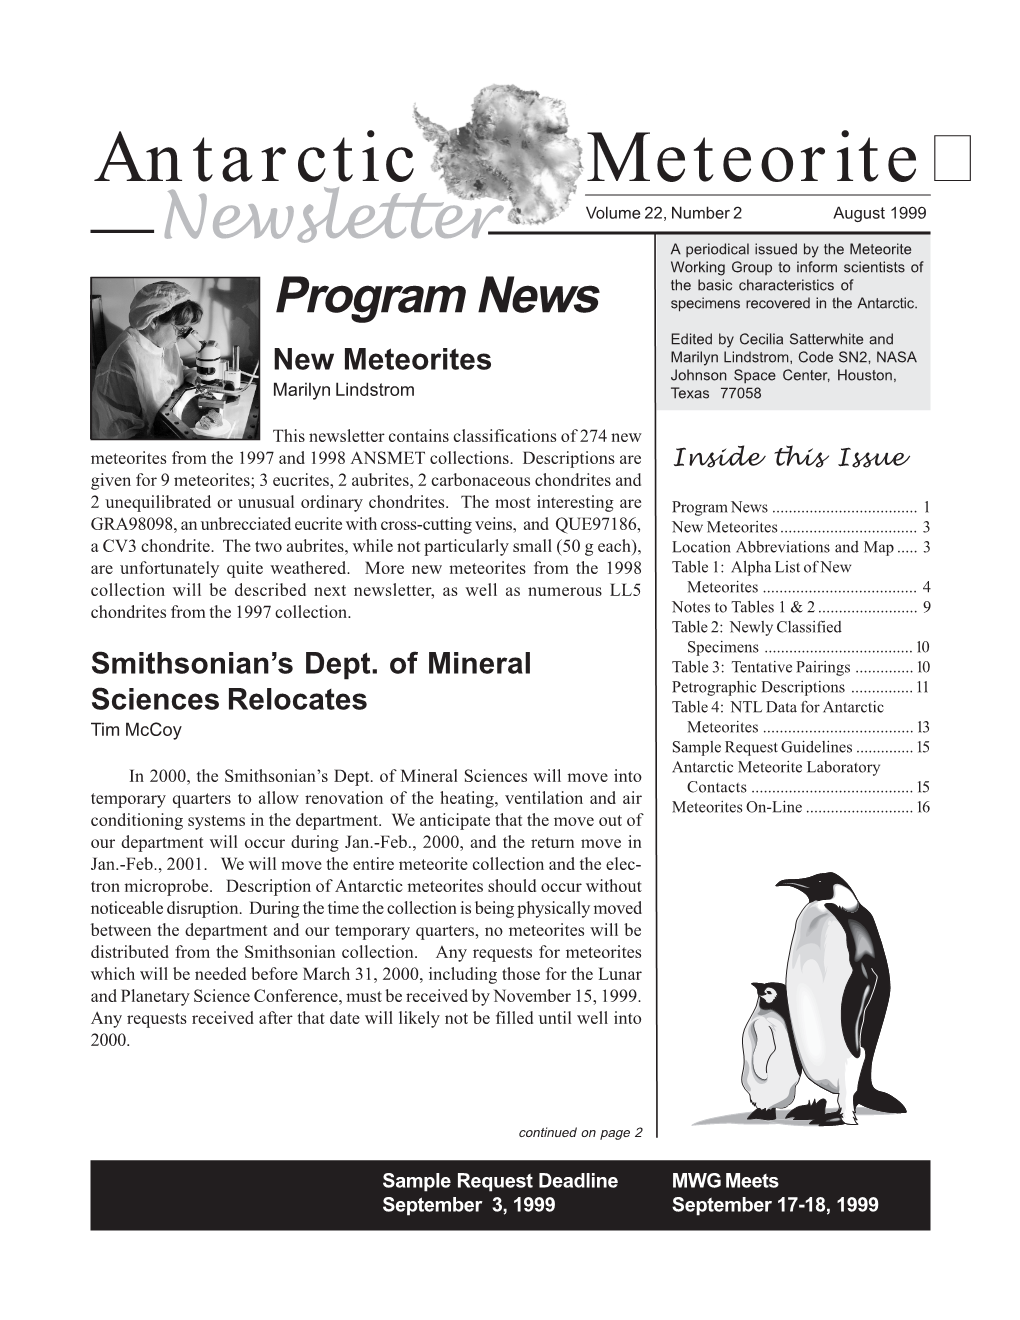 Antartic Meteorite Newsletter Volume 22, No 2